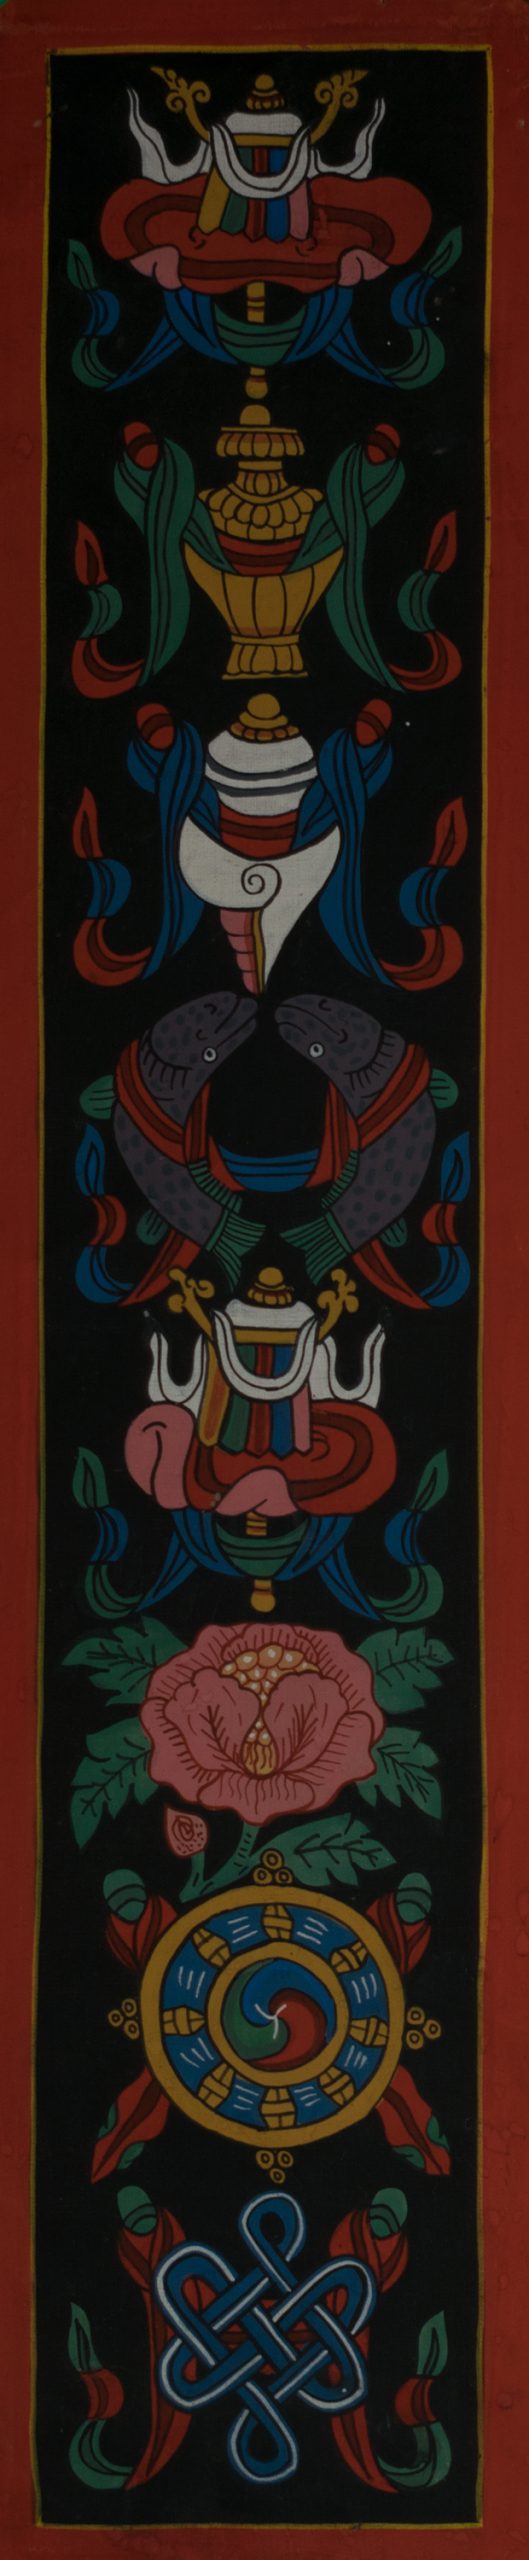 Asthamangal - handmade thangka painting from Nepal